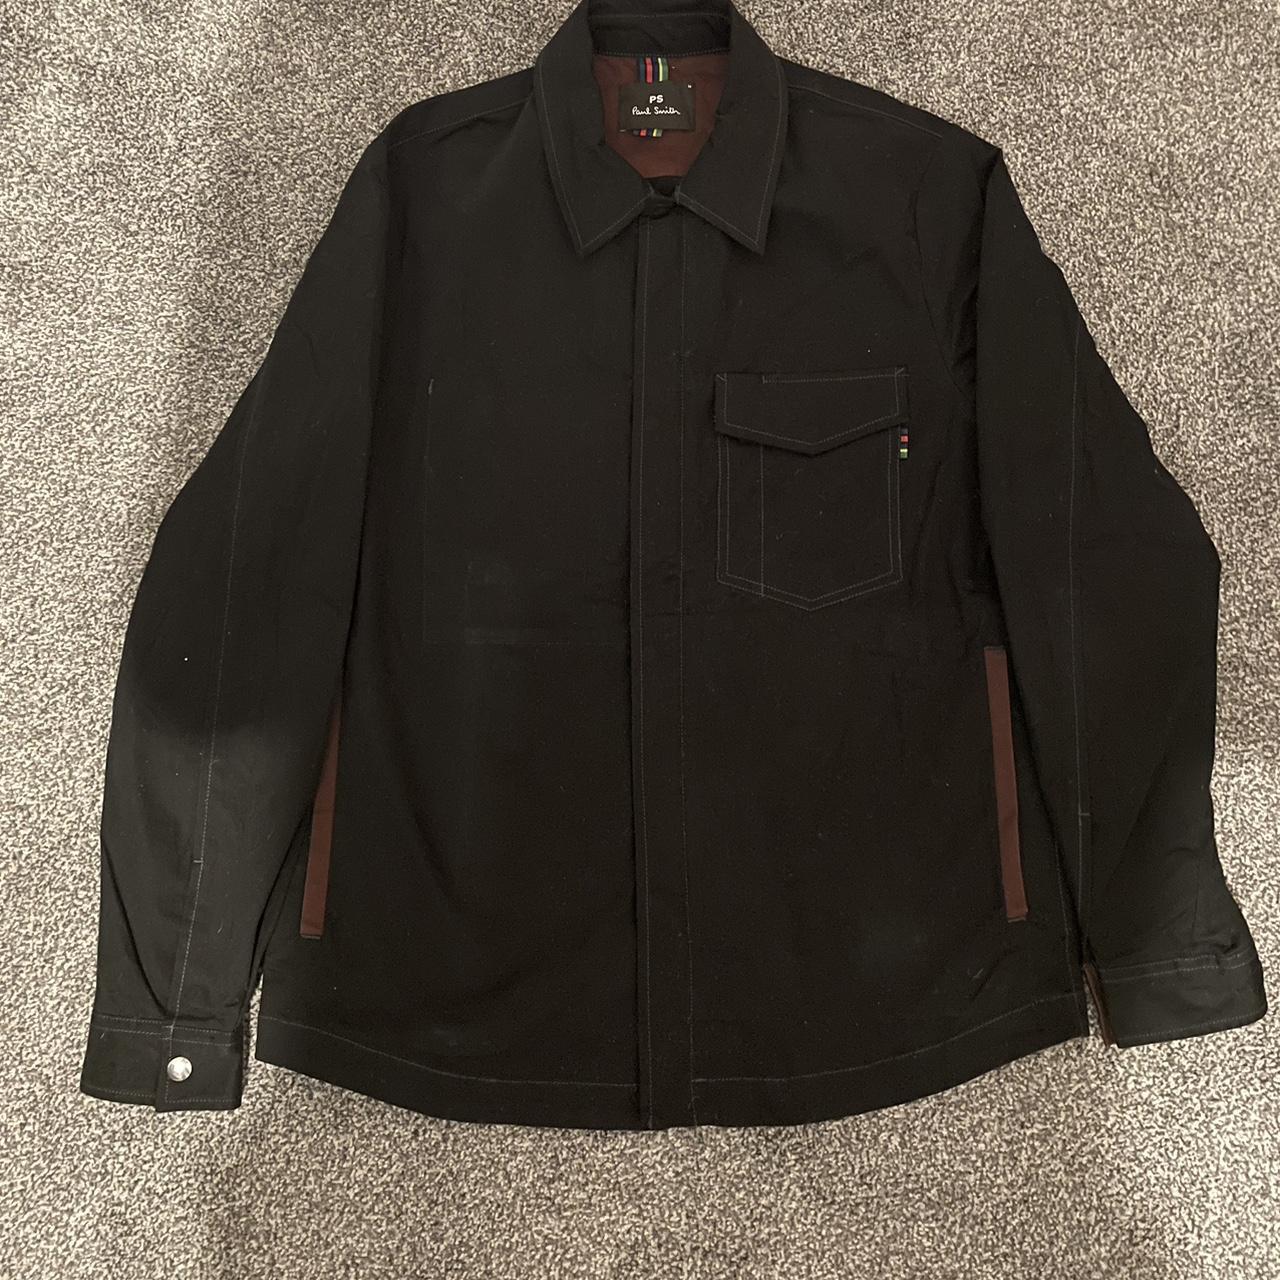 Paul smith Jacket Black Size medium Good condition - Depop